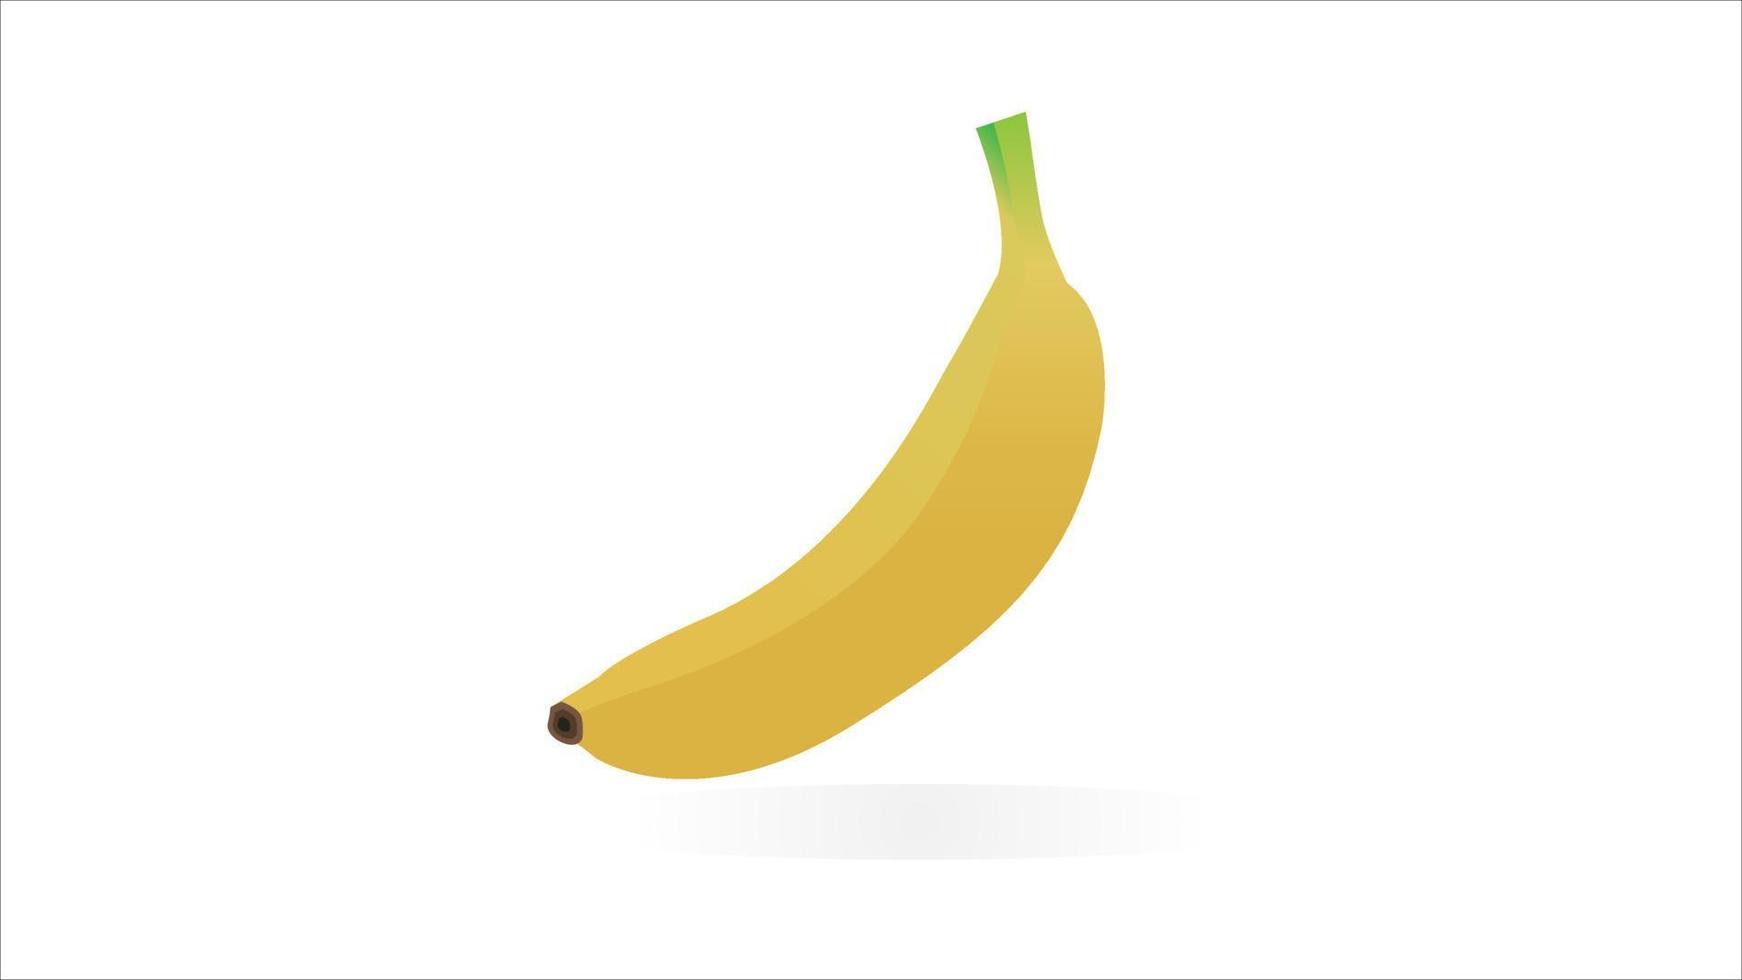 Isolated on white Banana vector illustration